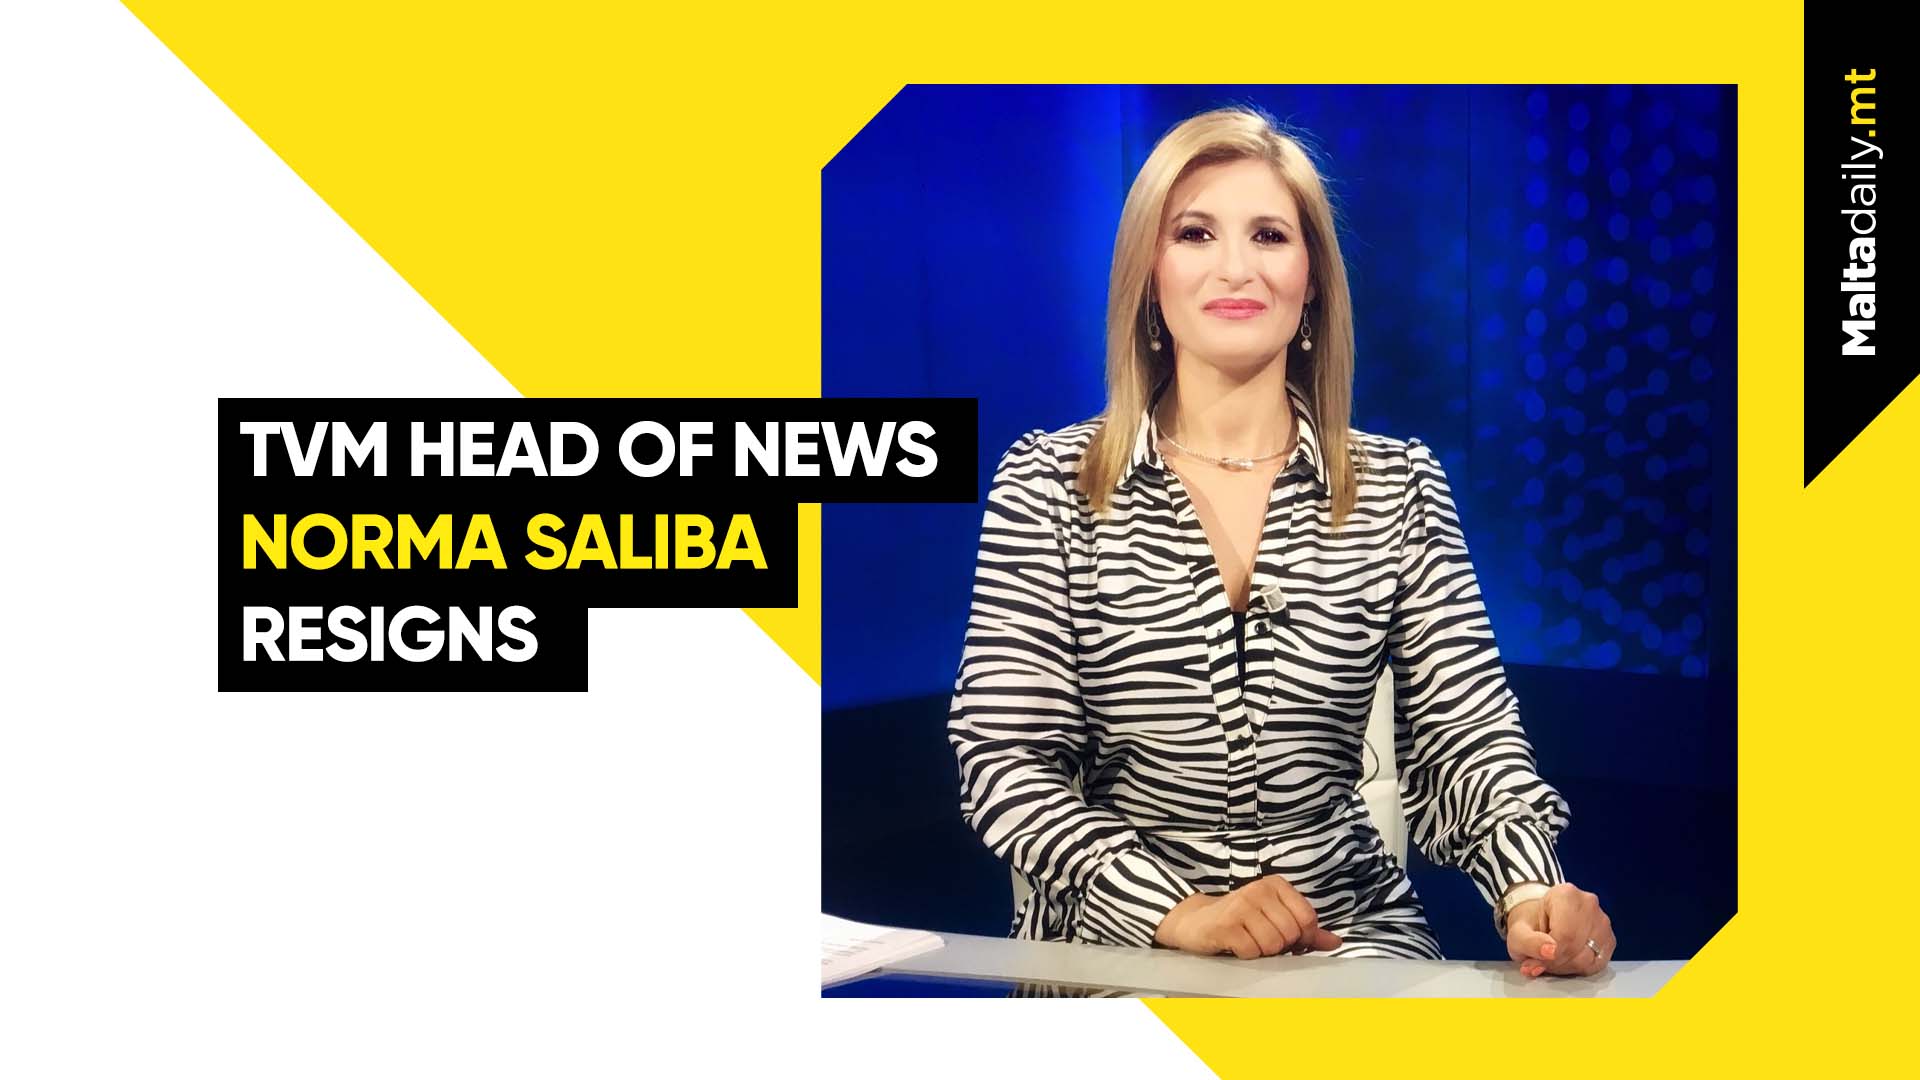 TVM Head Of News Norma Saliba Resigns